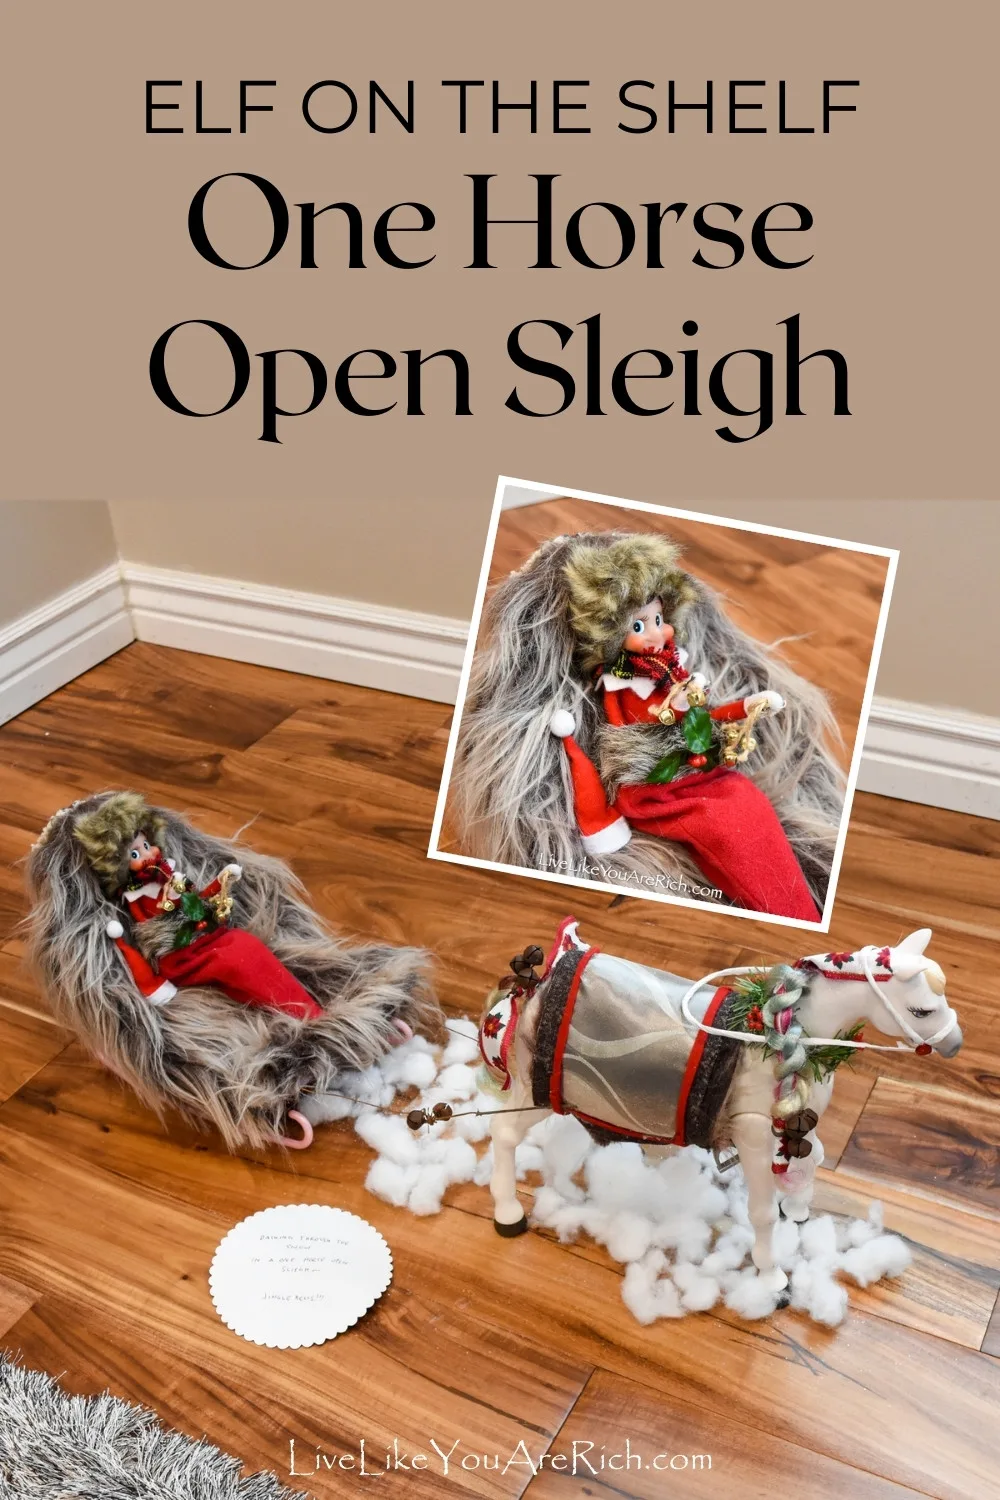 Elf on the Shelf: One Horse Open Sleigh